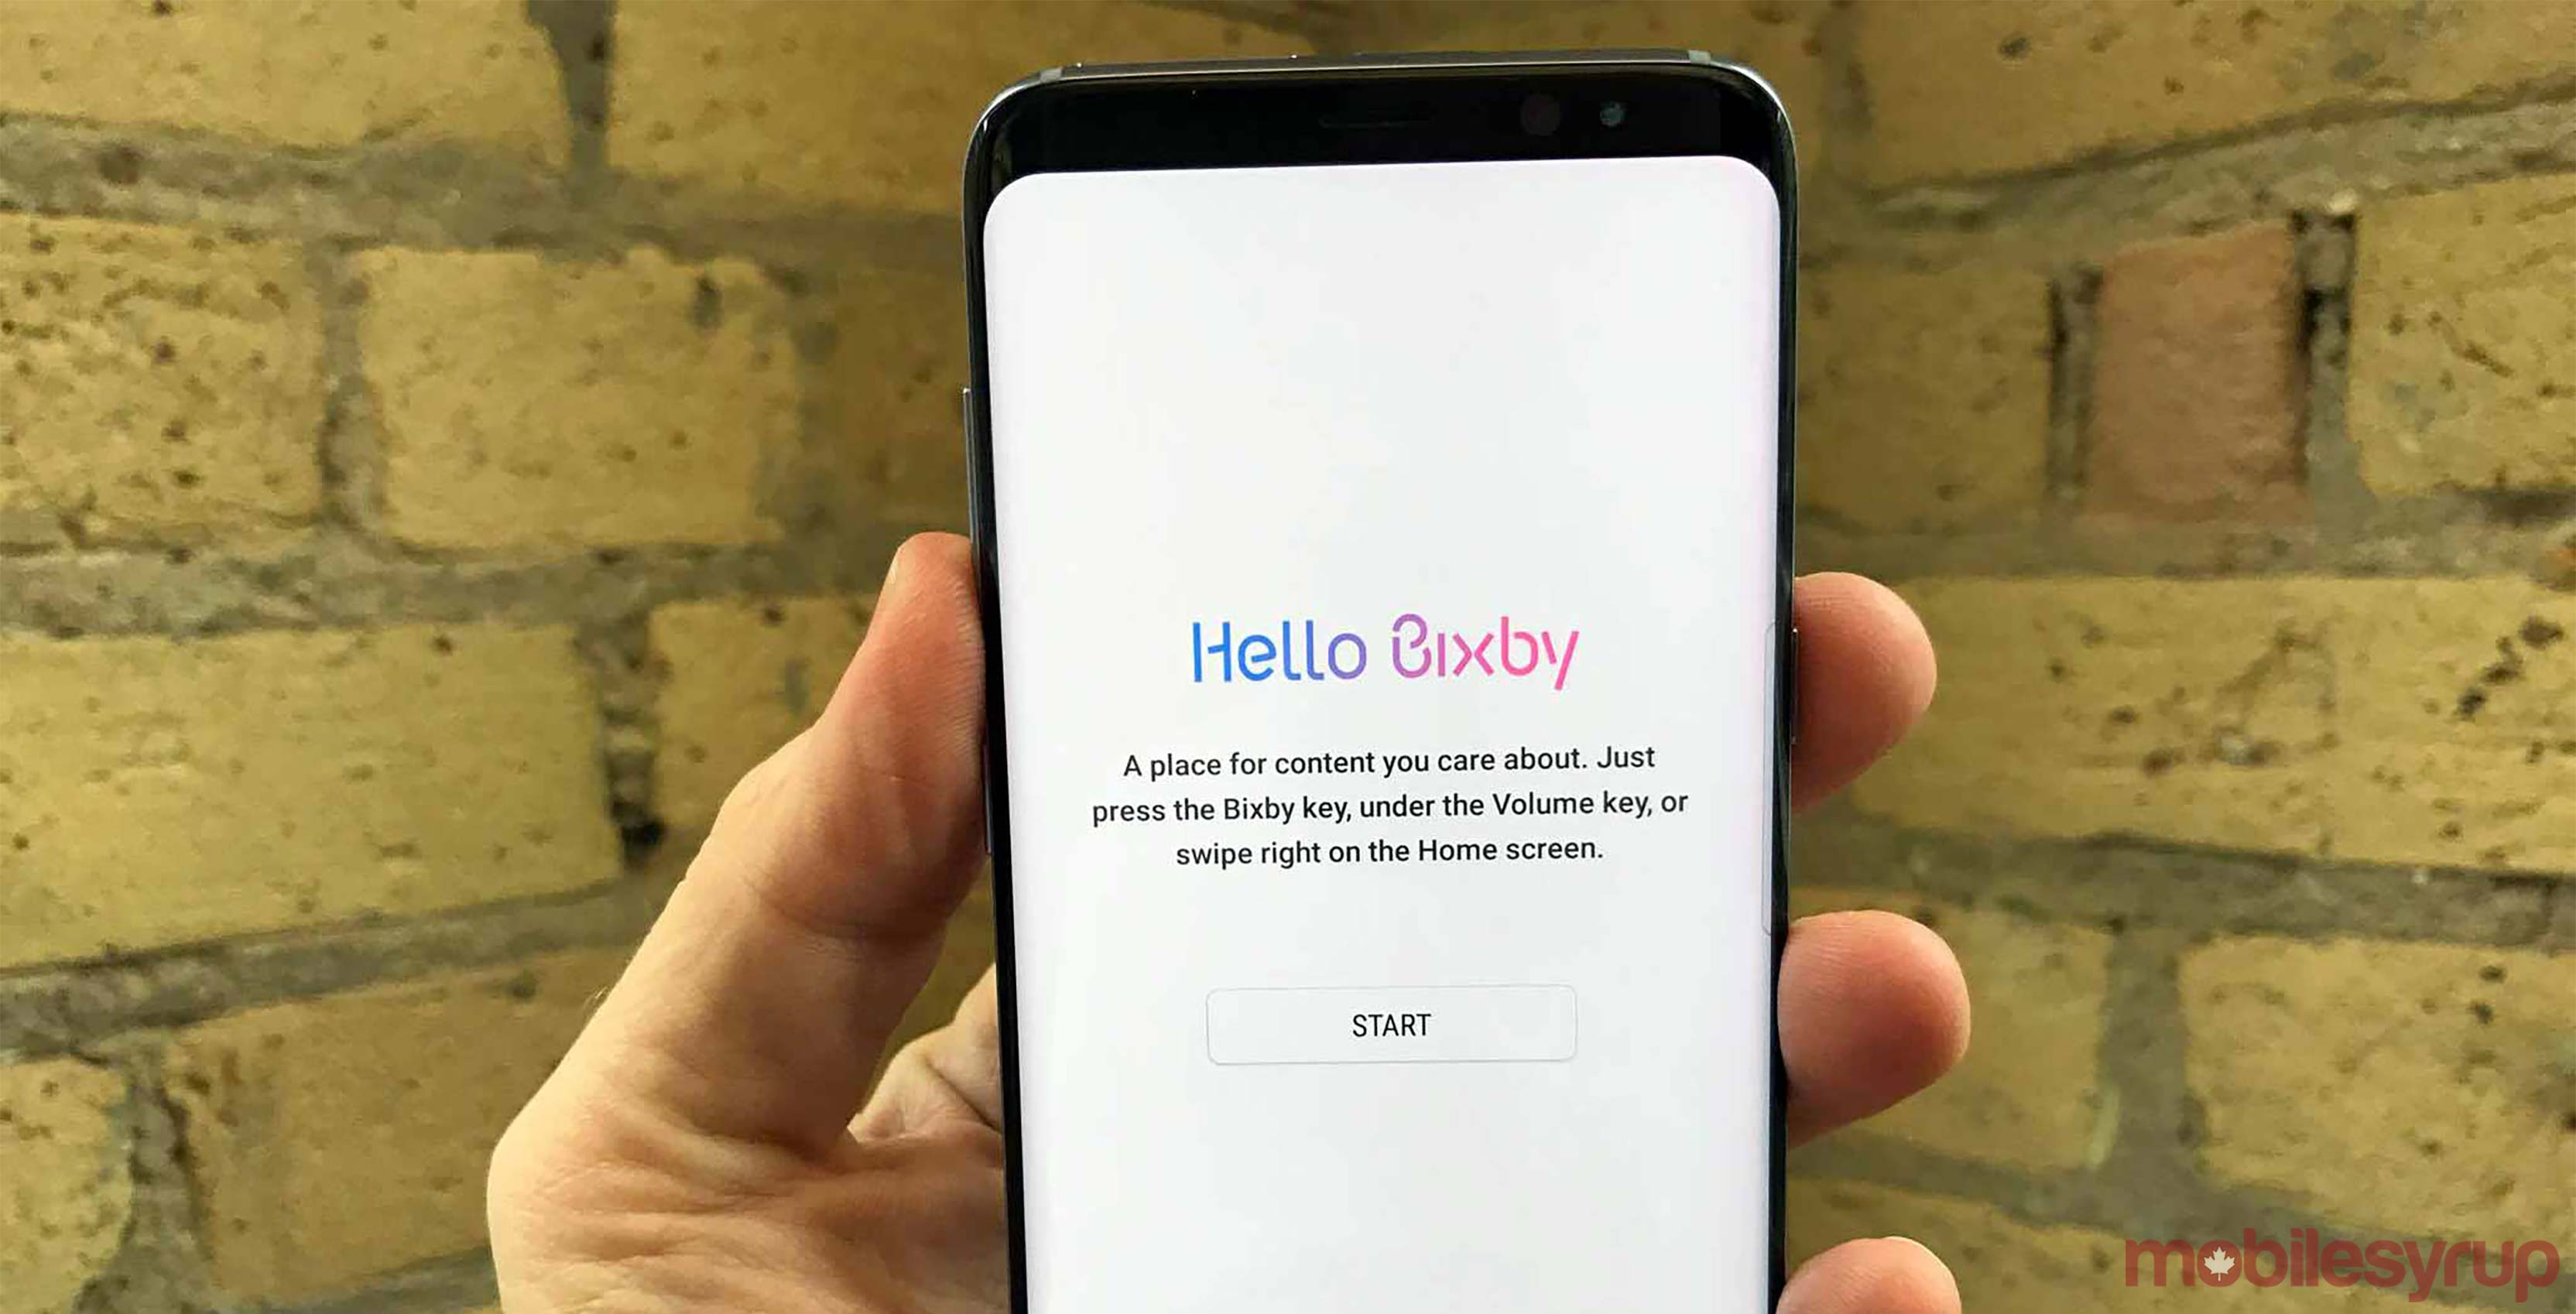 Bixby on the Samsung Galaxy S8